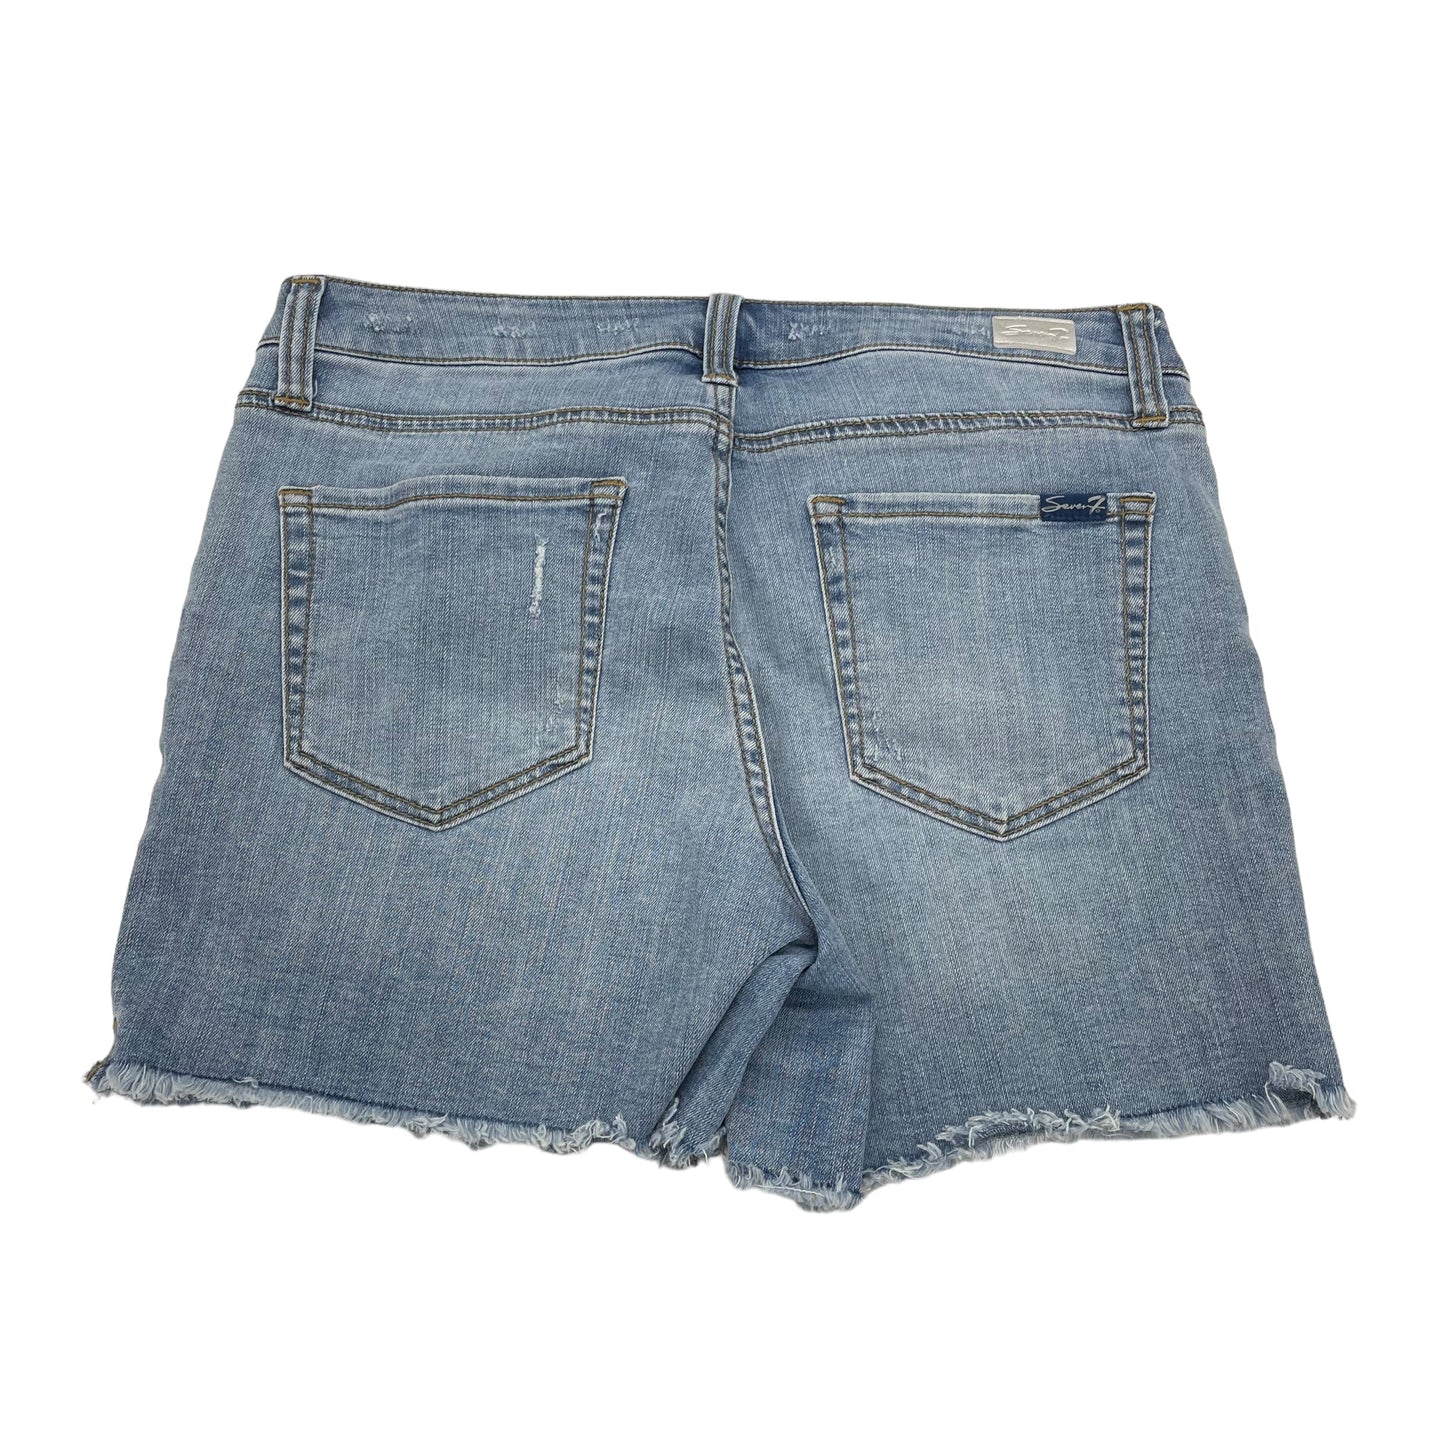 Blue Denim Shorts Seven 7, Size 8